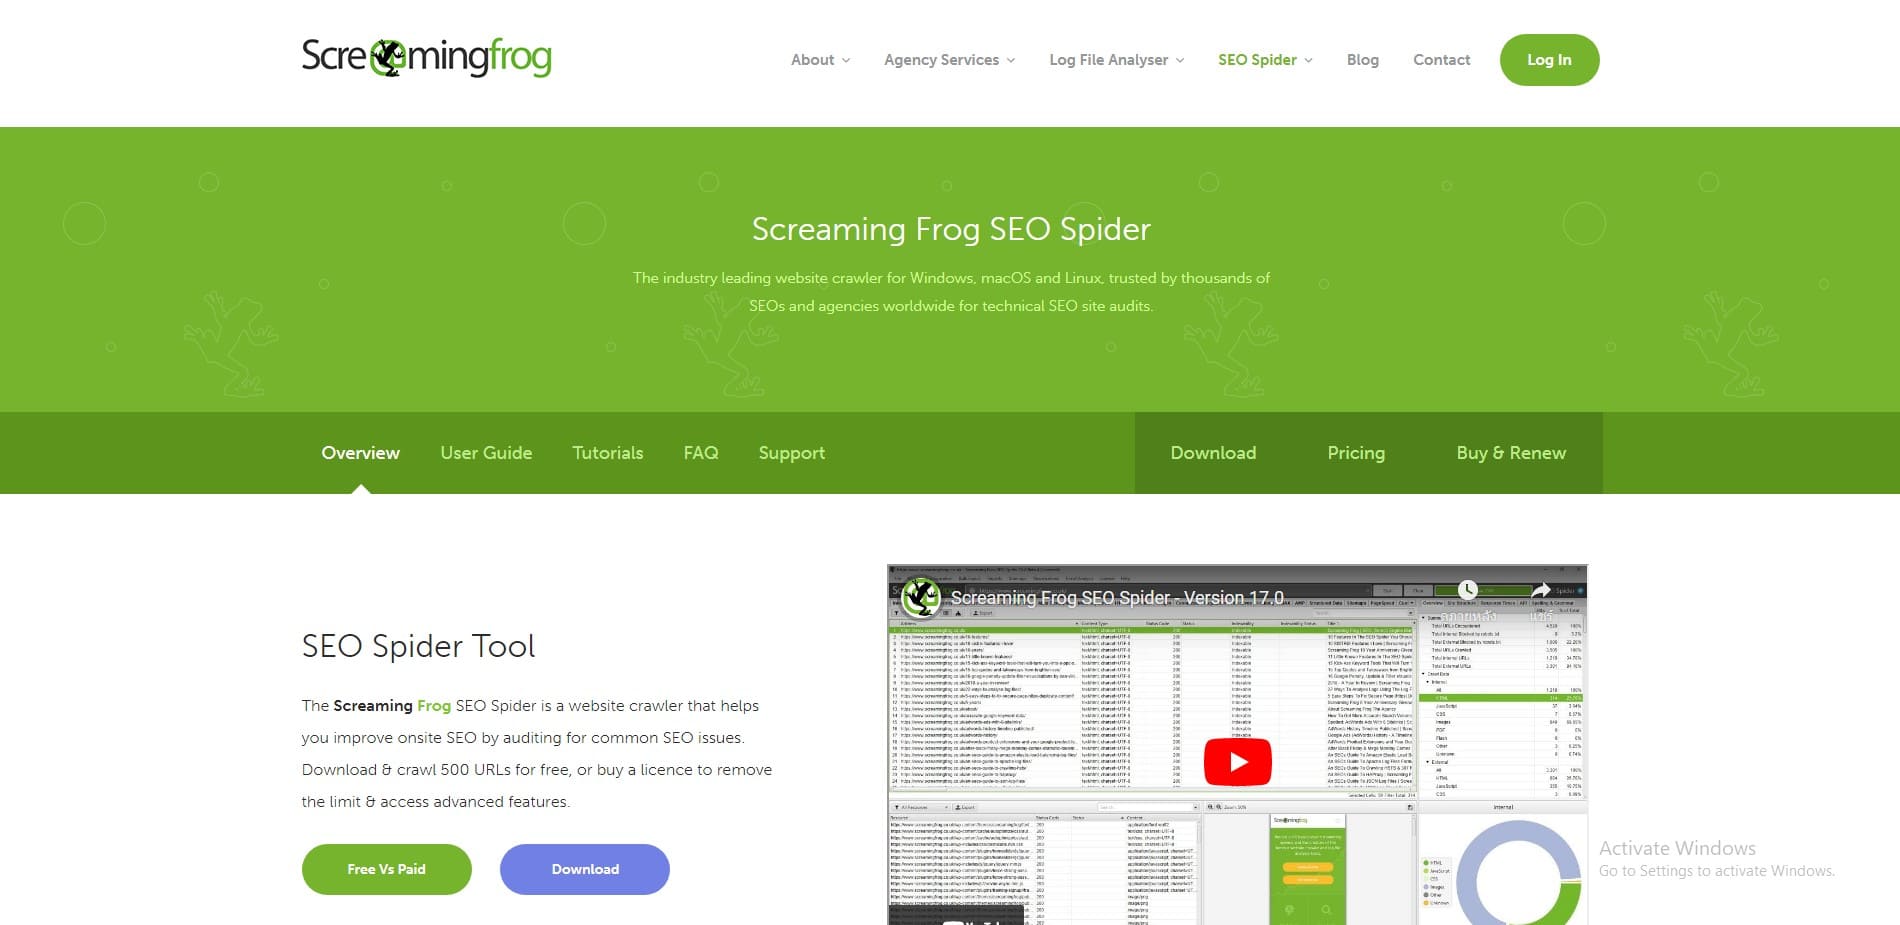 Screaming Frog เครื่องมือ SEO ที่ช่วยรวบรวมข้อมูลและรายละเอียดต่าง ๆ ในเชิงลึก